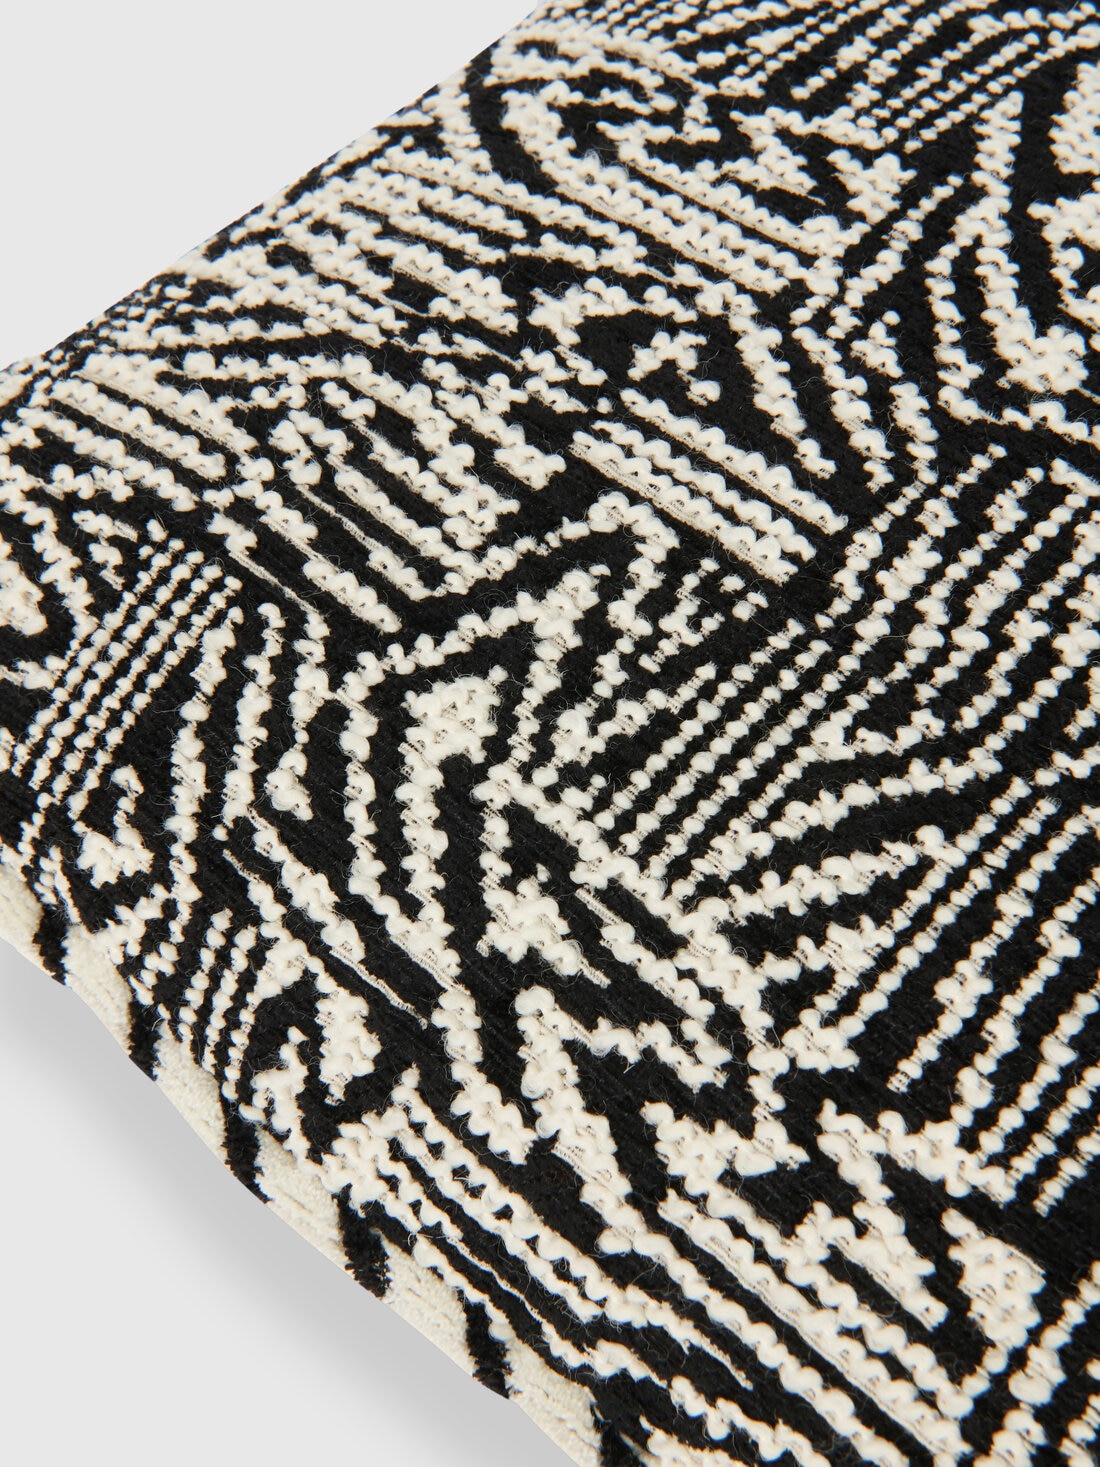 Noise 30x60 cm cushion with bouclé work, Black & White - 8051575837784 - 2